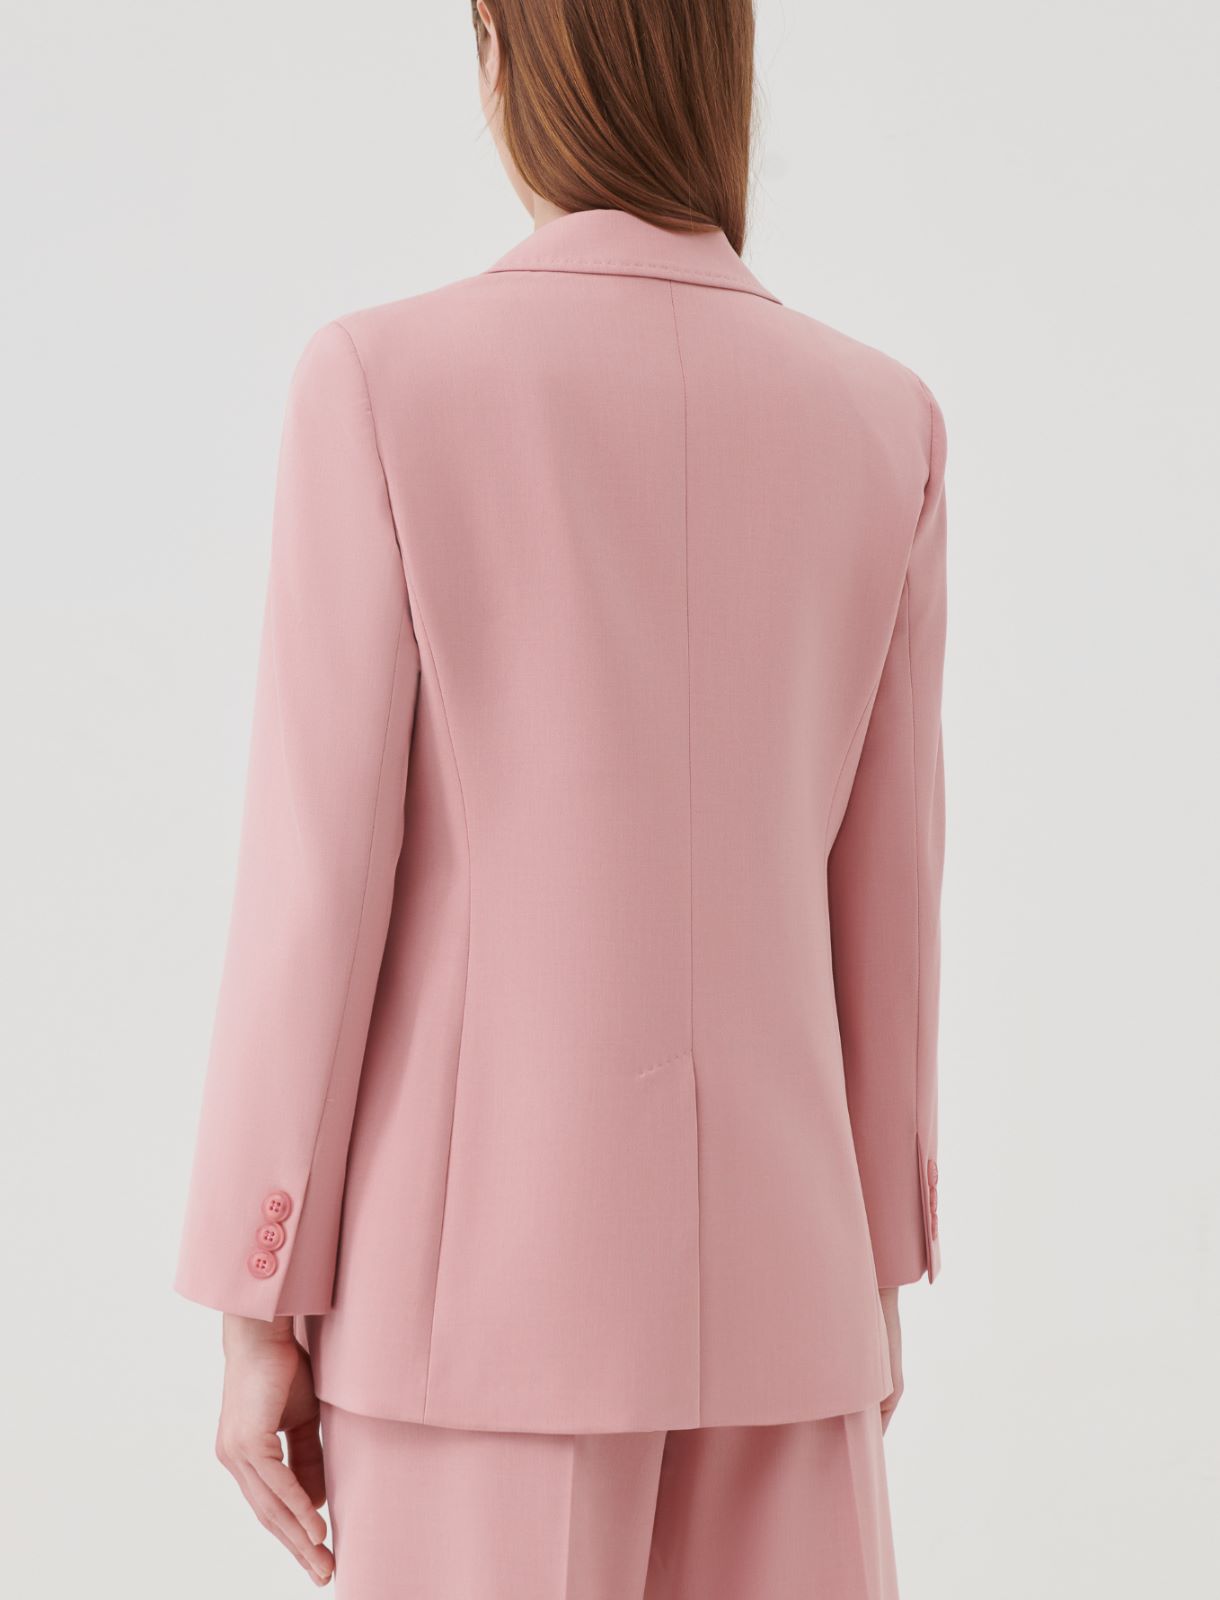 Semi-fitted blazer - Pink - Marella - 2